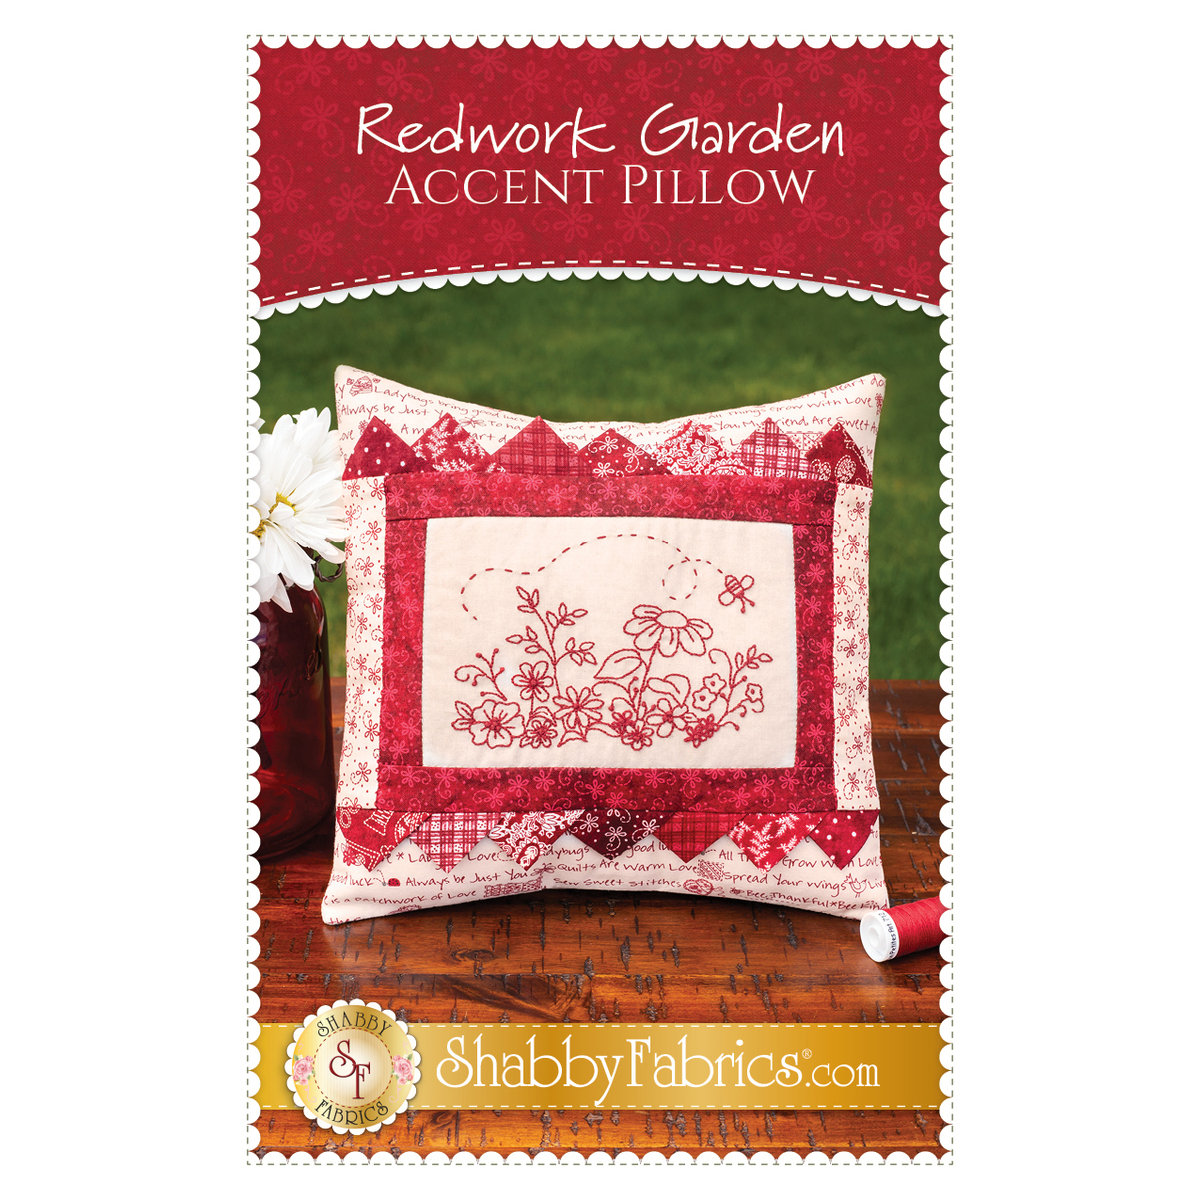 Redwork Garden Accent Pillow Pattern - PDF Download | Shabby